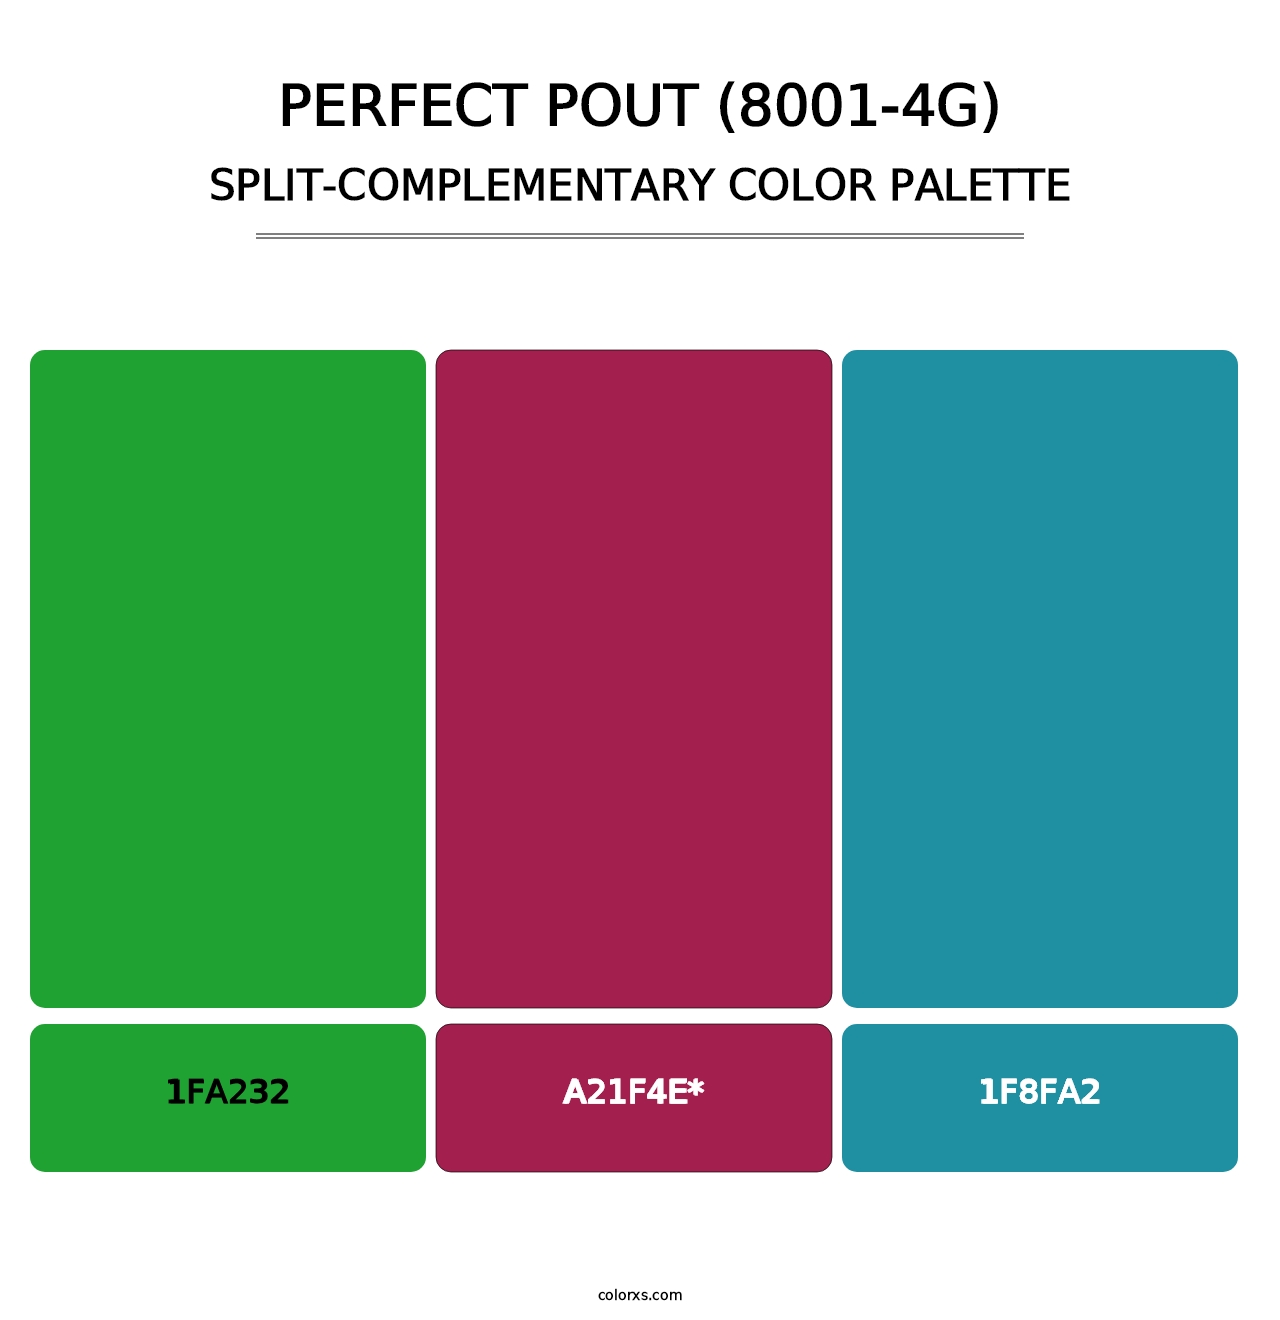 Perfect Pout (8001-4G) - Split-Complementary Color Palette